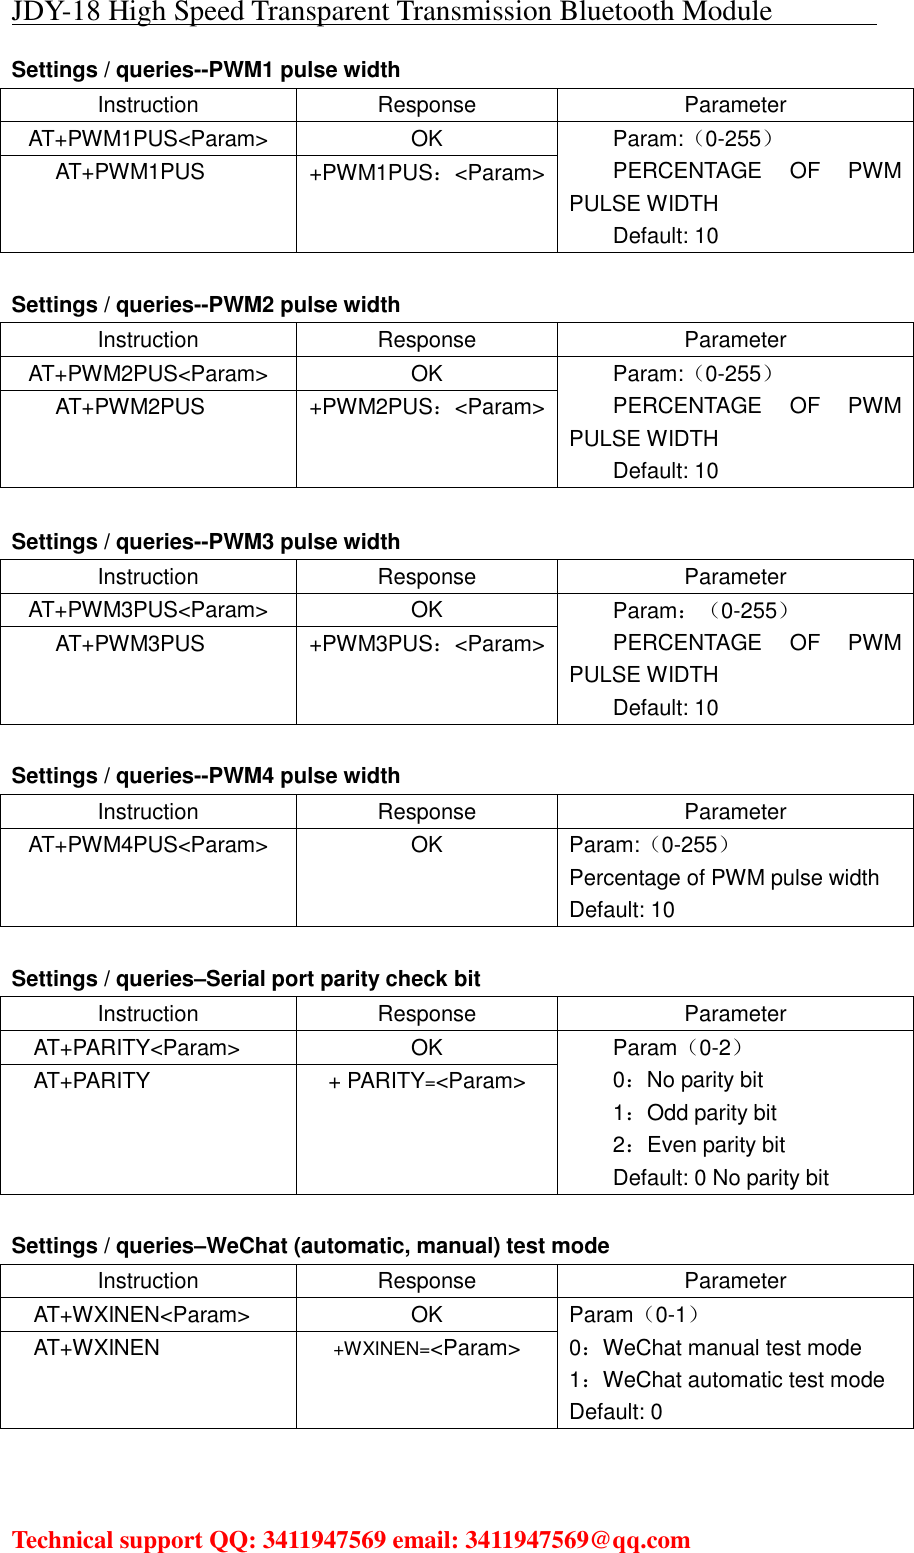 JDY-18 High Speed Transparent Transmission Bluetooth Module                                     Technical support QQ: 3411947569 email: 3411947569@qq.com   Settings / queries--PWM1 pulse width Instruction  Response  Parameter AT+PWM1PUS&lt;Param&gt;  OK Param:（0-255） PERCENTAGE  OF  PWM PULSE WIDTH Default: 10 AT+PWM1PUS  +PWM1PUS：&lt;Param&gt;  Settings / queries--PWM2 pulse width Instruction  Response  Parameter AT+PWM2PUS&lt;Param&gt;  OK Param:（0-255） PERCENTAGE  OF  PWM PULSE WIDTH Default: 10 AT+PWM2PUS  +PWM2PUS：&lt;Param&gt;  Settings / queries--PWM3 pulse width Instruction  Response  Parameter AT+PWM3PUS&lt;Param&gt;  OK Param：（0-255） PERCENTAGE  OF  PWM PULSE WIDTH Default: 10 AT+PWM3PUS  +PWM3PUS：&lt;Param&gt;  Settings / queries--PWM4 pulse width Instruction  Response  Parameter AT+PWM4PUS&lt;Param&gt;  OK Param:（0-255） Percentage of PWM pulse width Default: 10  Settings / queries–Serial port parity check bit   Instruction  Response  Parameter AT+PARITY&lt;Param&gt;  OK Param（0-2） 0：No parity bit 1：Odd parity bit 2：Even parity bit Default: 0 No parity bit AT+PARITY  + PARITY=&lt;Param&gt;  Settings / queries–WeChat (automatic, manual) test mode   Instruction  Response  Parameter AT+WXINEN&lt;Param&gt;  OK Param（0-1） 0：WeChat manual test mode 1：WeChat automatic test mode Default: 0 AT+WXINEN  +WXINEN=&lt;Param&gt;  